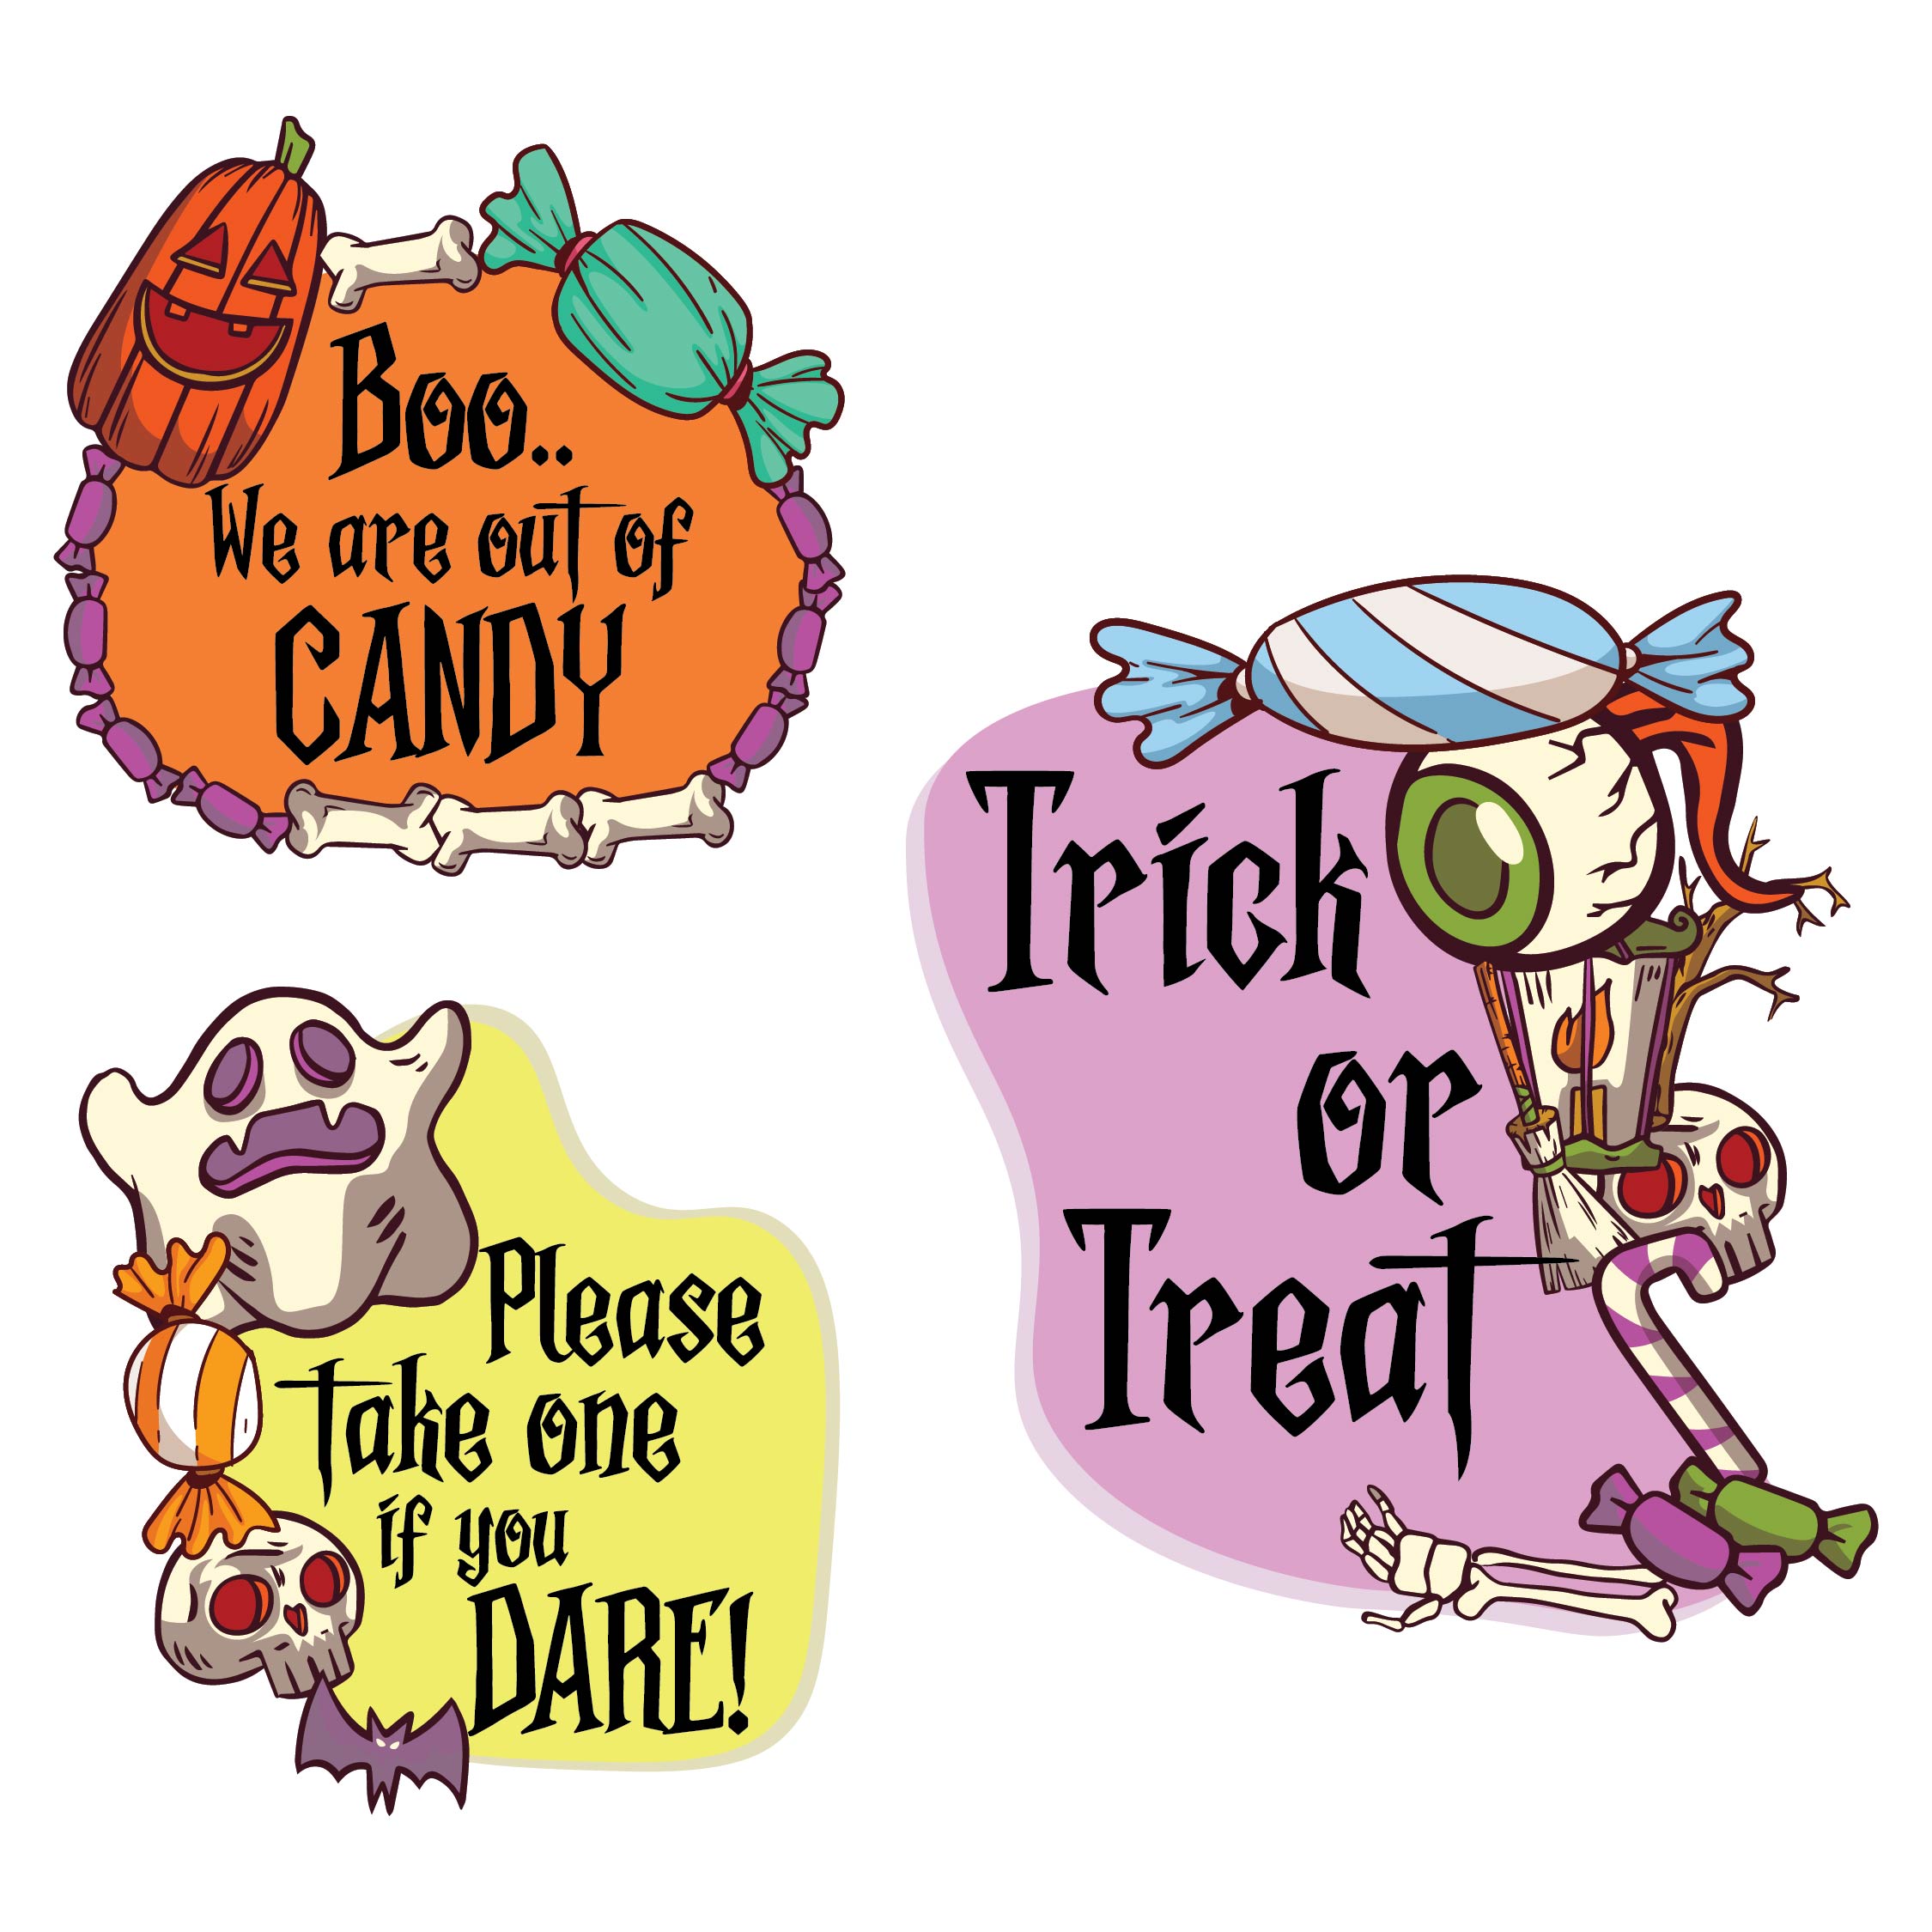 Printable Halloween Candy Signs